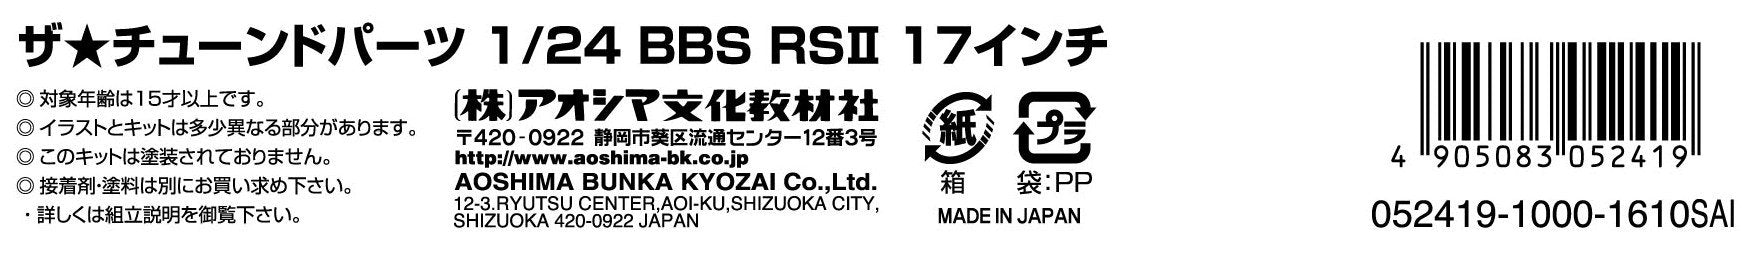 Aoshima 52419 Tuned Parts 02 1/24 BBS RS II 17inch Tire & Wheel Set Model Parts_6